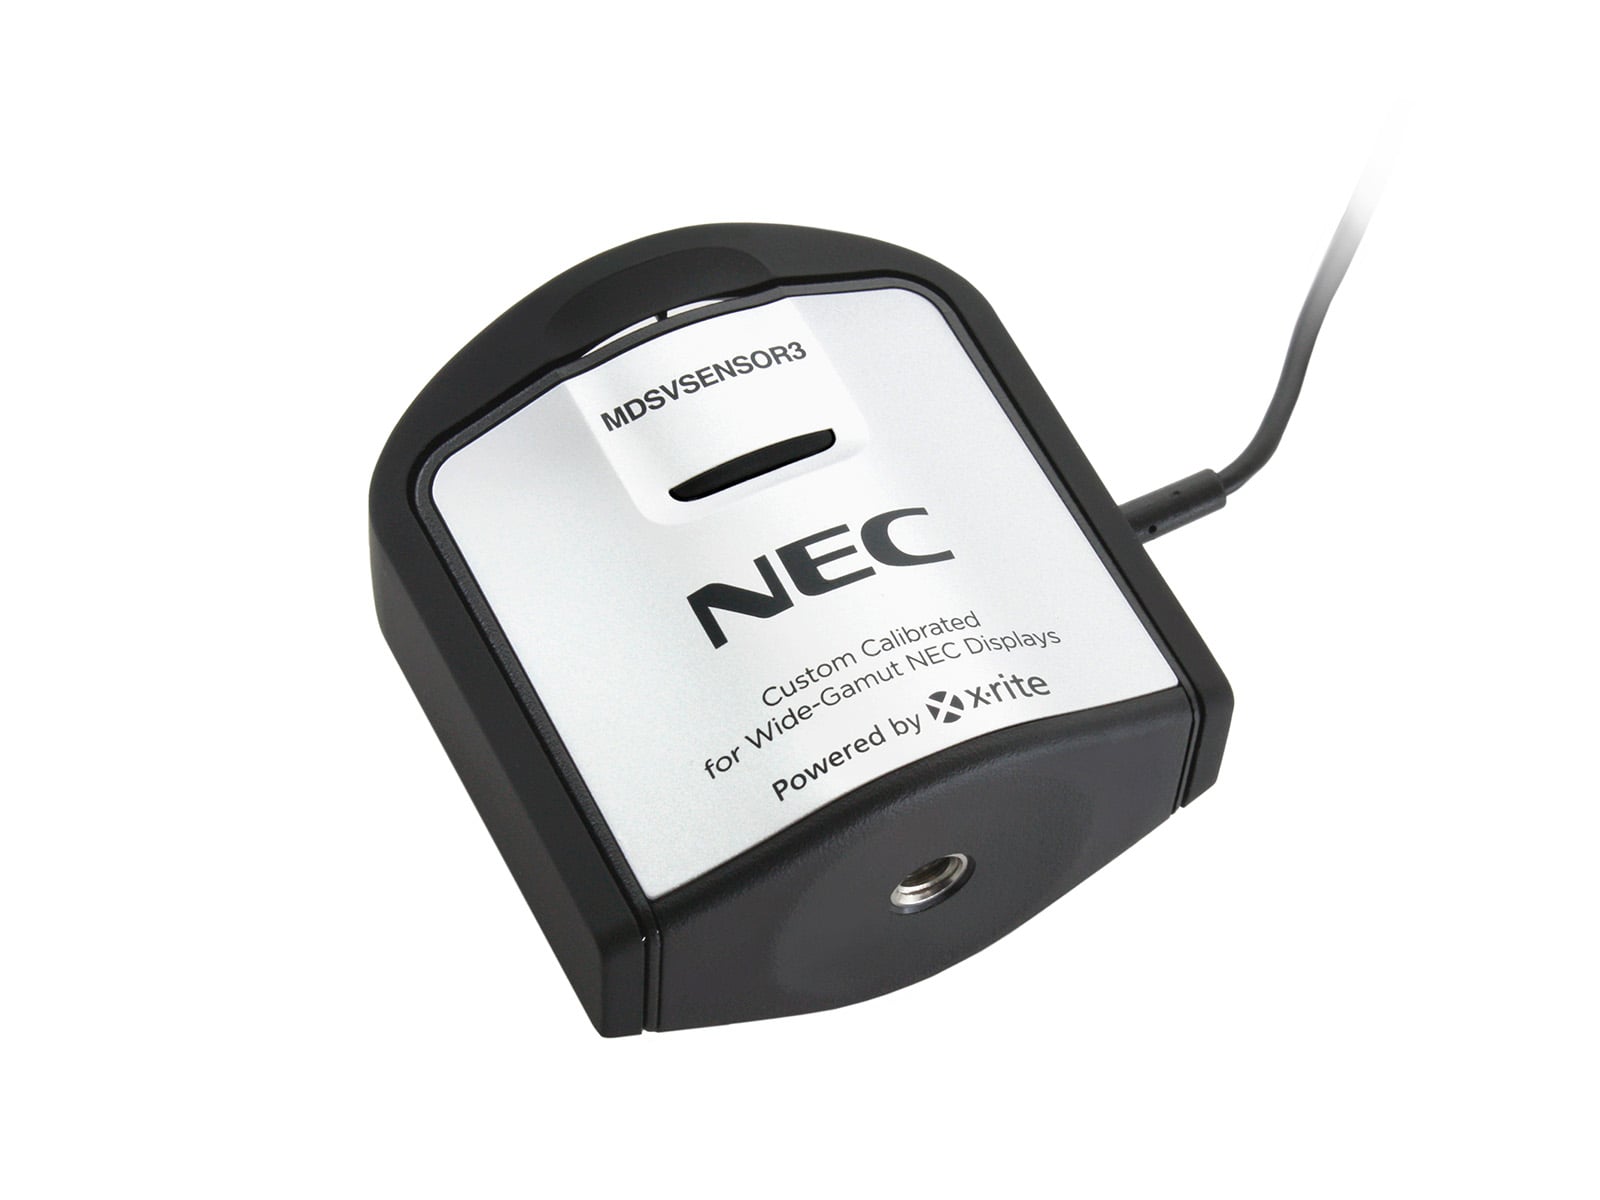 NEC SpectraSensor Pro 컬러 의료용 디스플레이 교정 센서(MDSVSENSOR3) Monitors.com